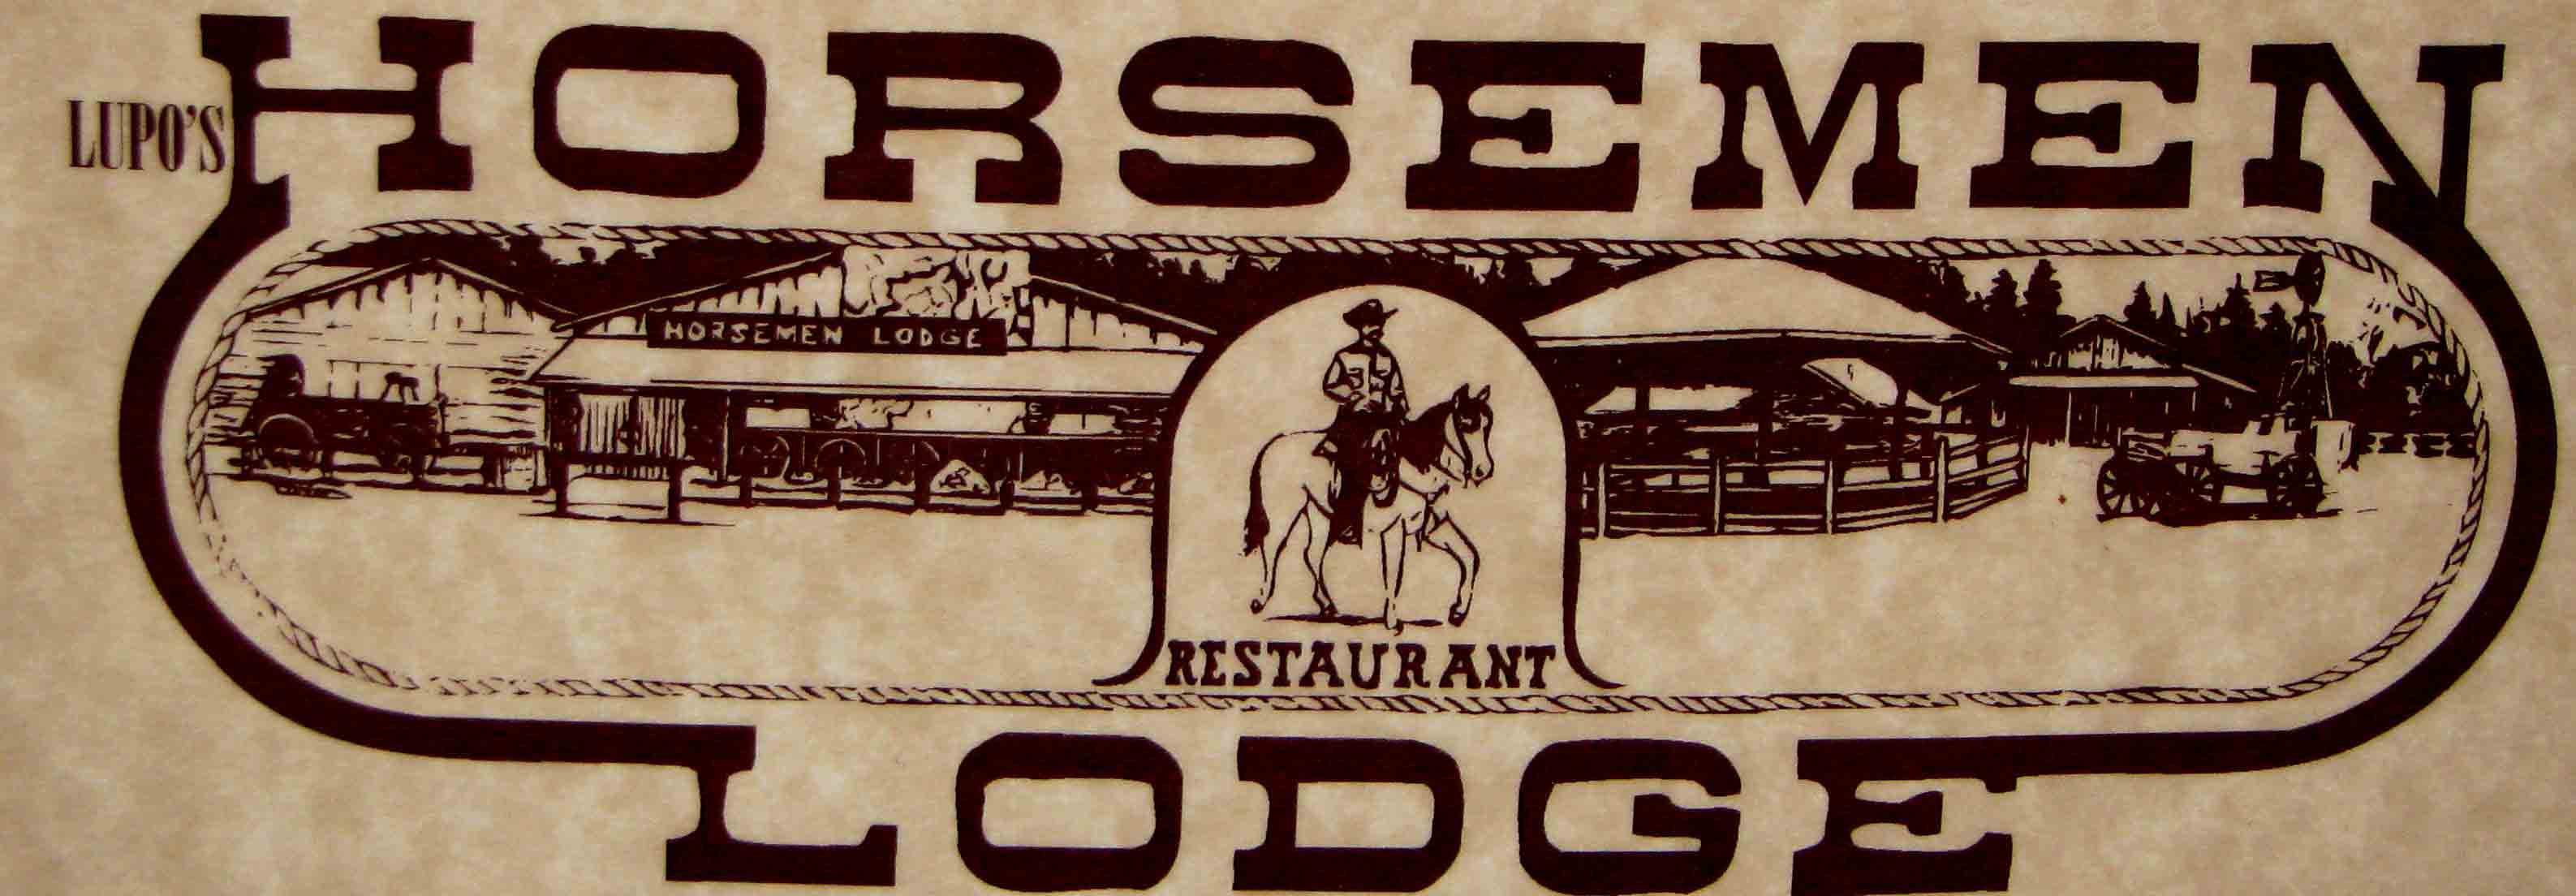 Lupo’s Horsemen Lodge